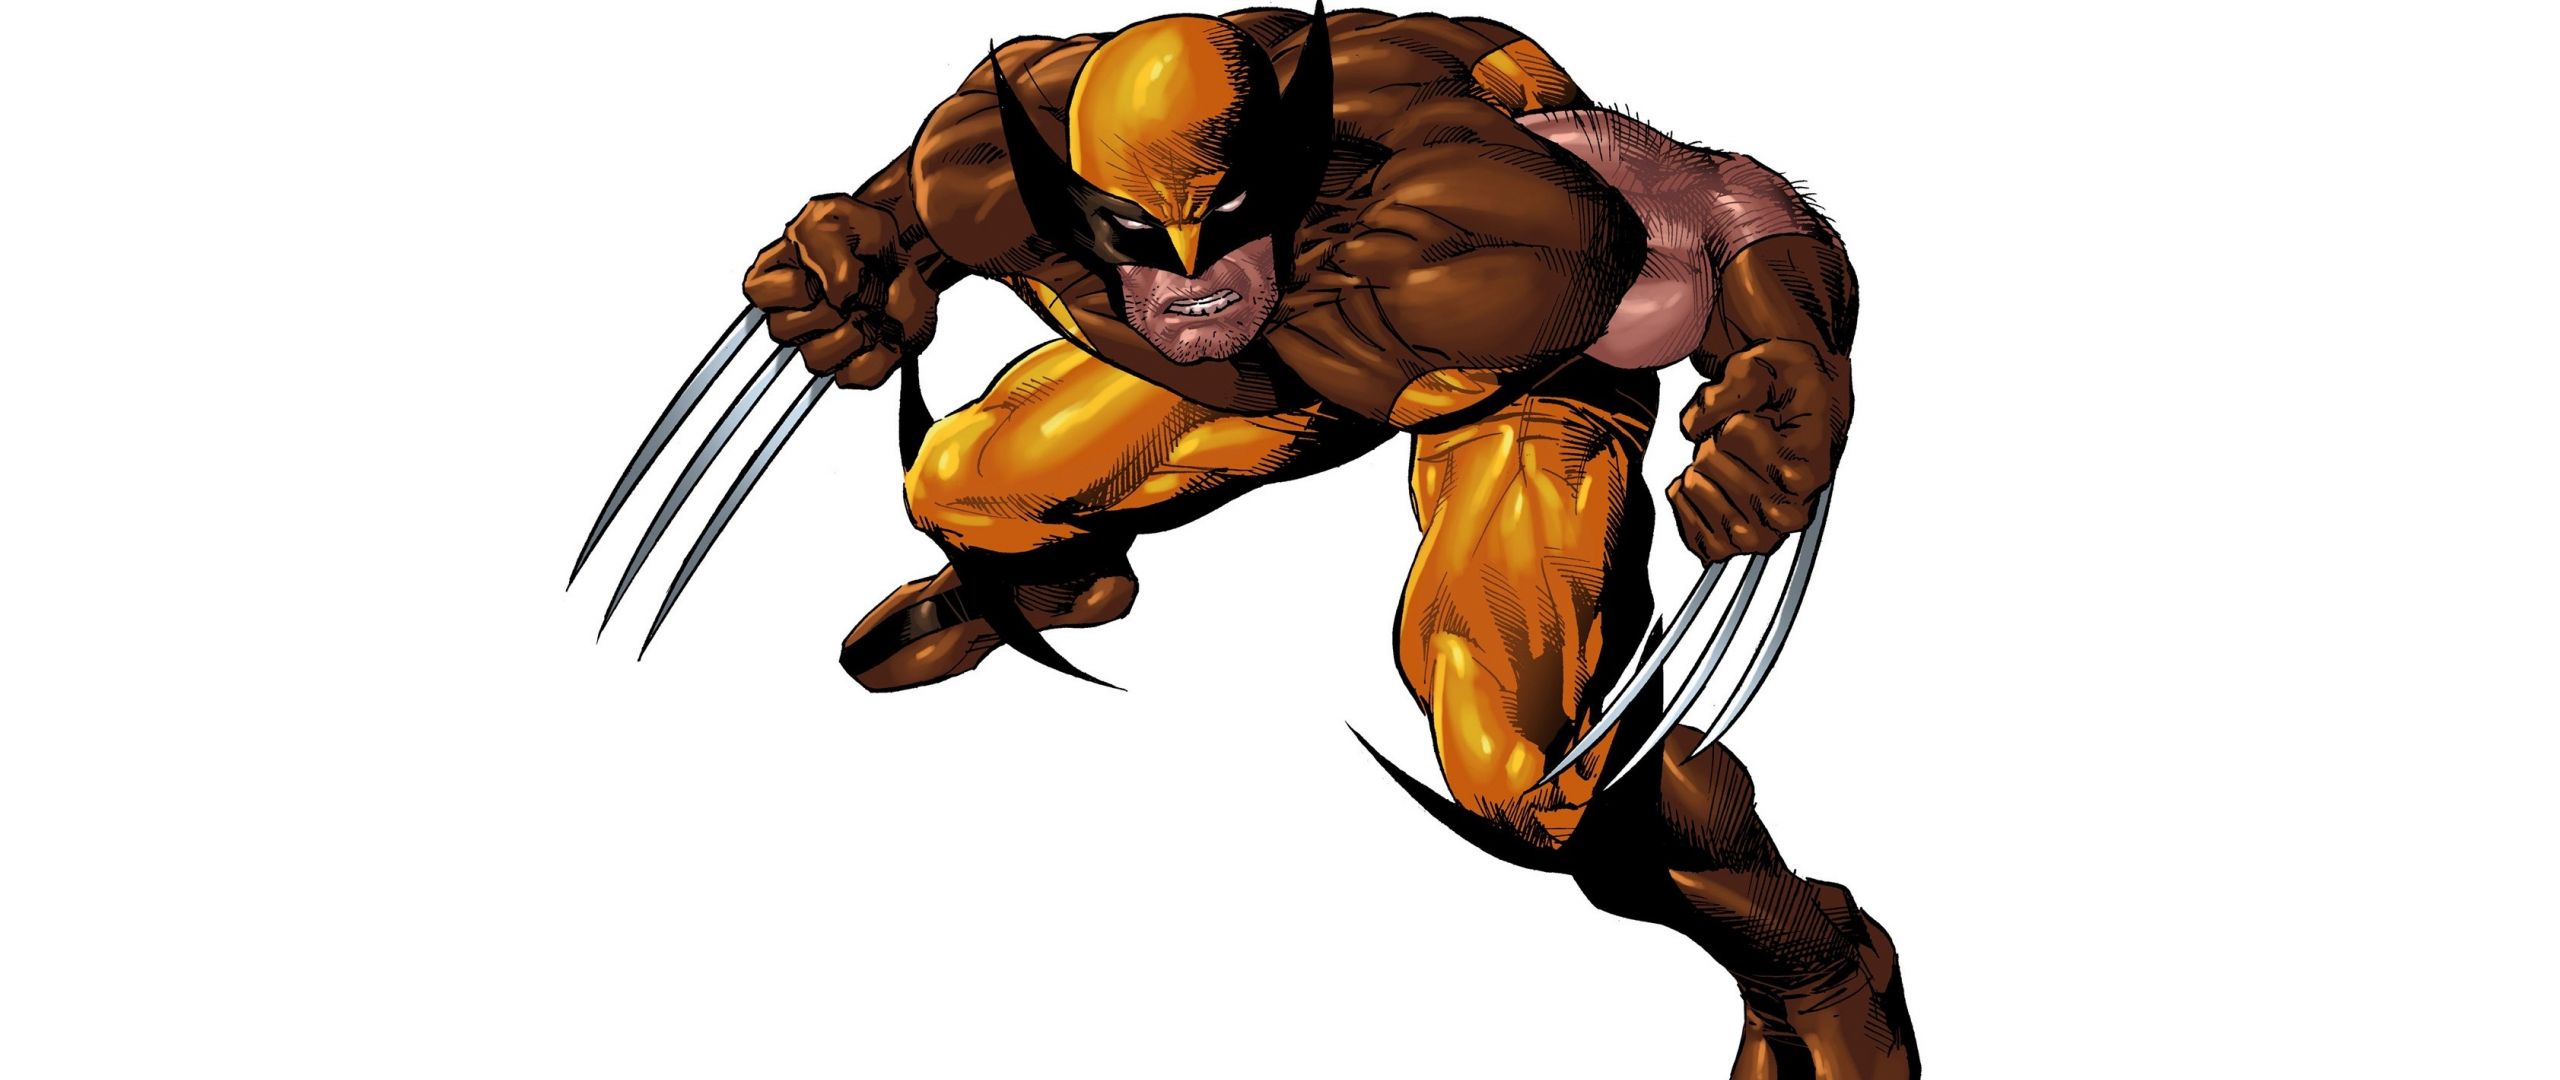 Download 2560x1080 Wallpaper Wolverine, X Men, Minimal, Marvel Comics, Superhero, Dual Wide, Widescreen, 2560x1080 HD Image, Background, 1374